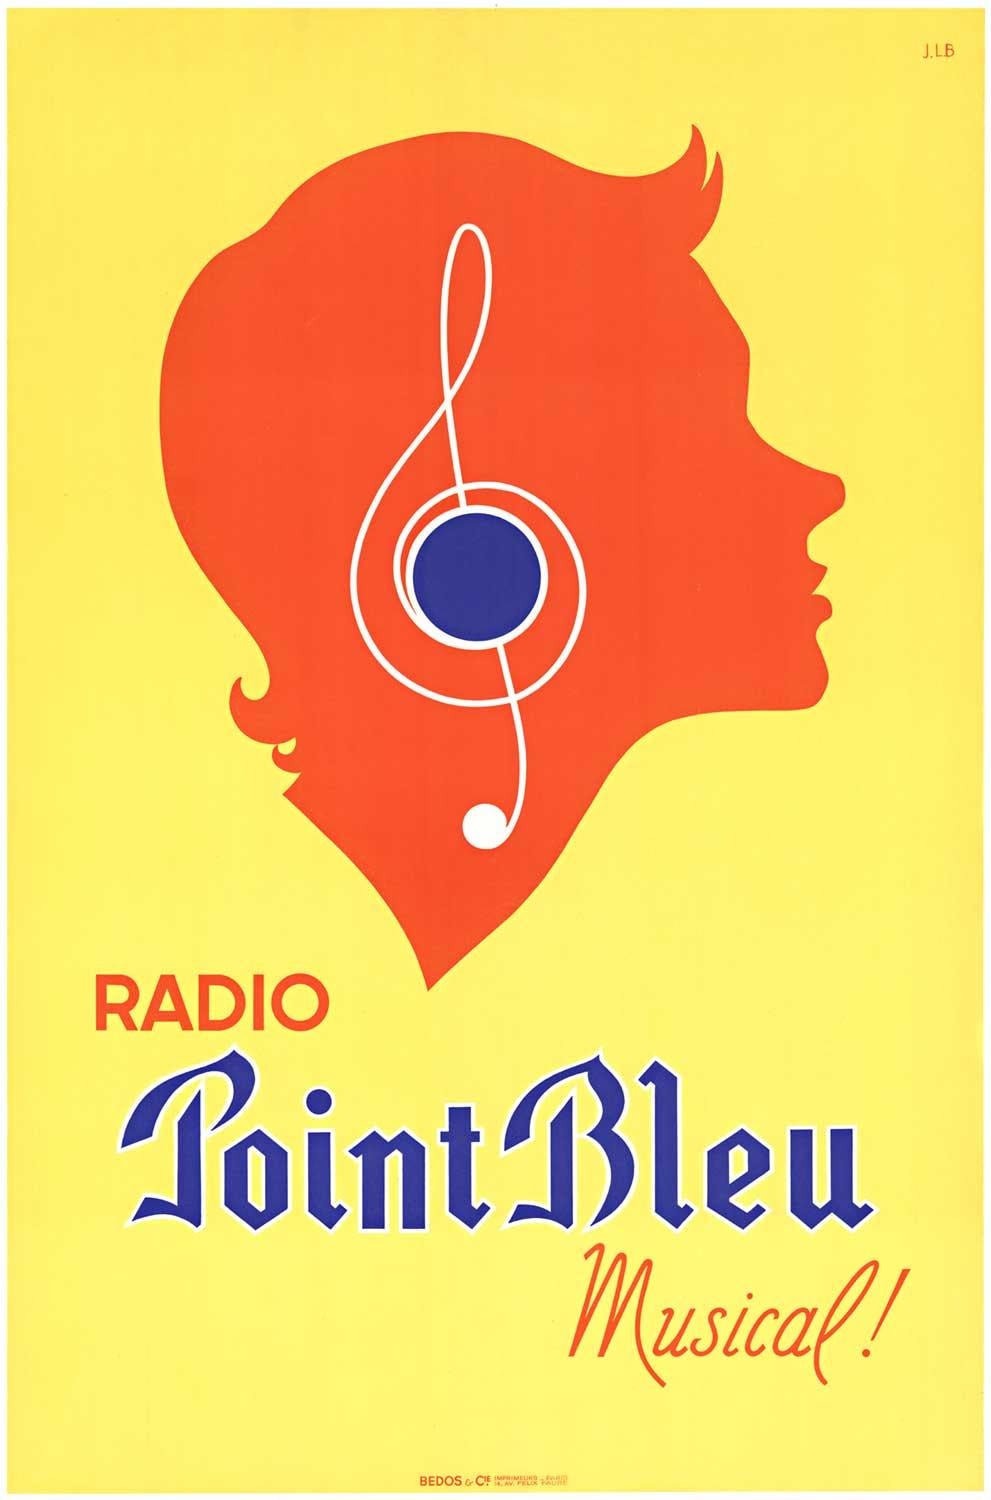 Original "Radio Point Bleu Musical!" vintage French poster, linen backed